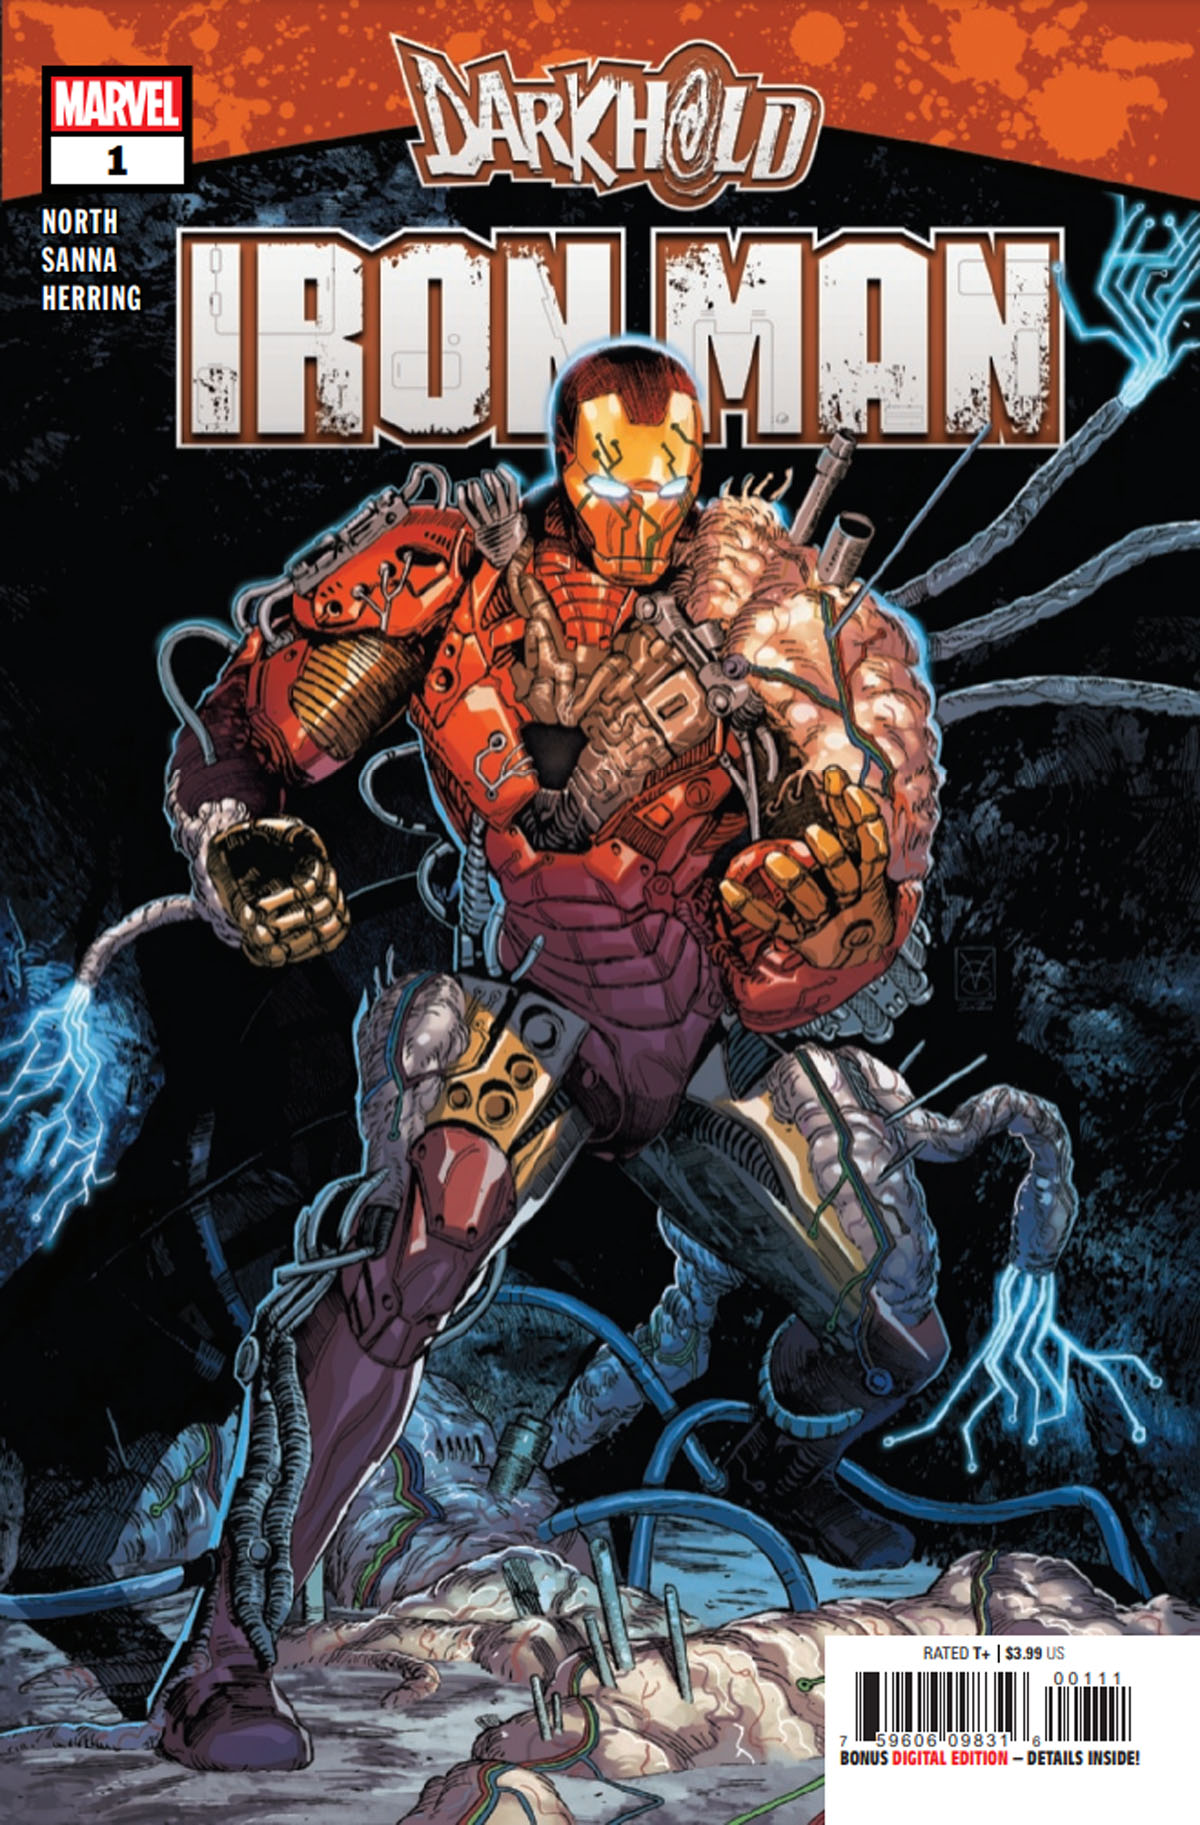 Darkhold: Iron Man #1 cover